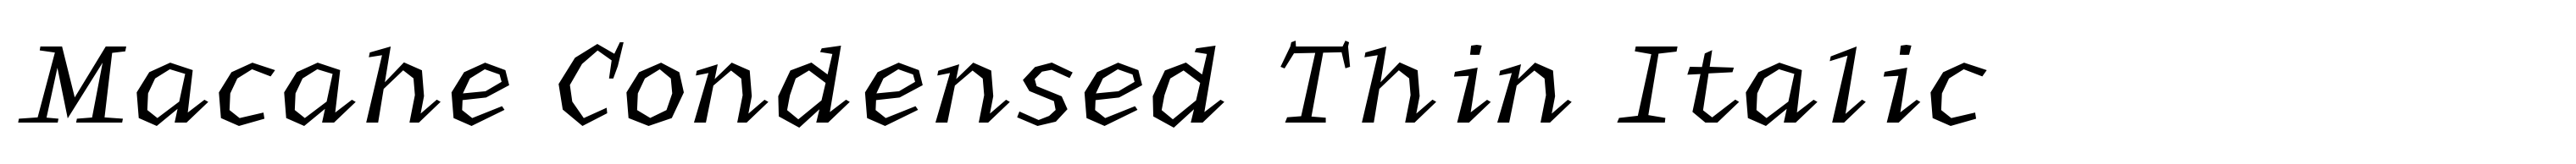 Macahe Condensed Thin Italic